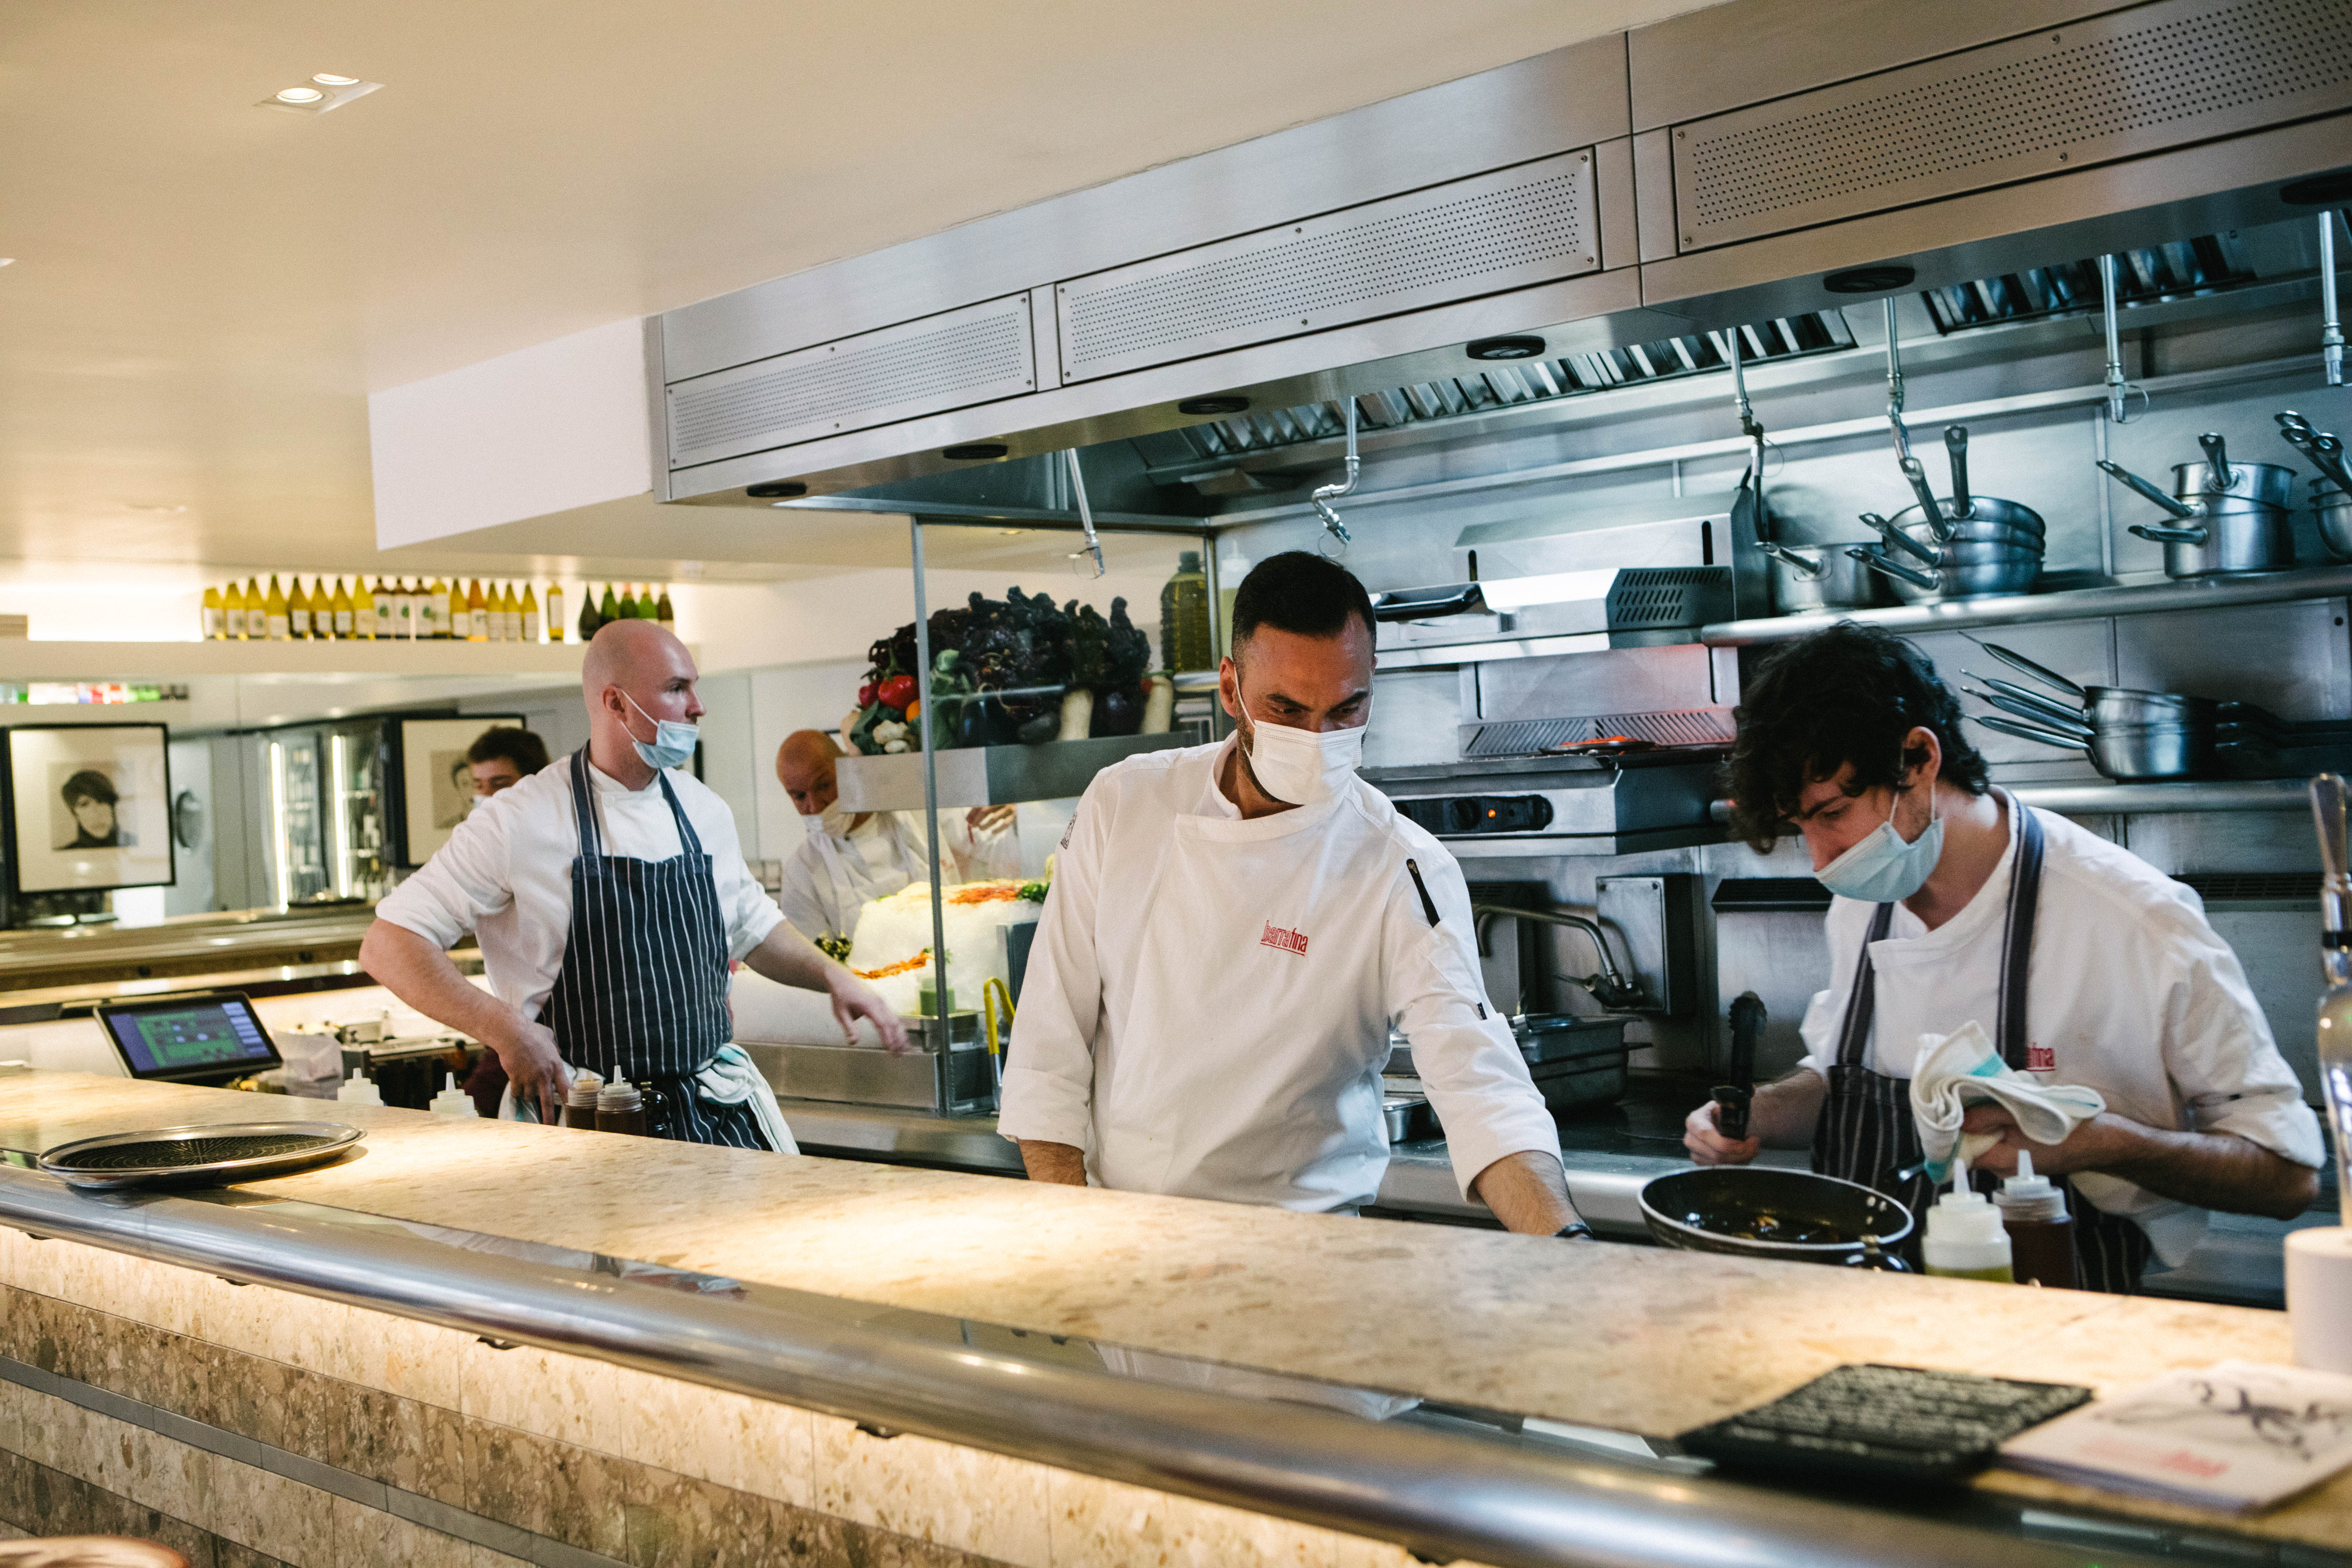 Soho区的米其林星级餐厅Barrafina将向顾客提供炸丸子火腿、猪蹄和对虾等菜肴